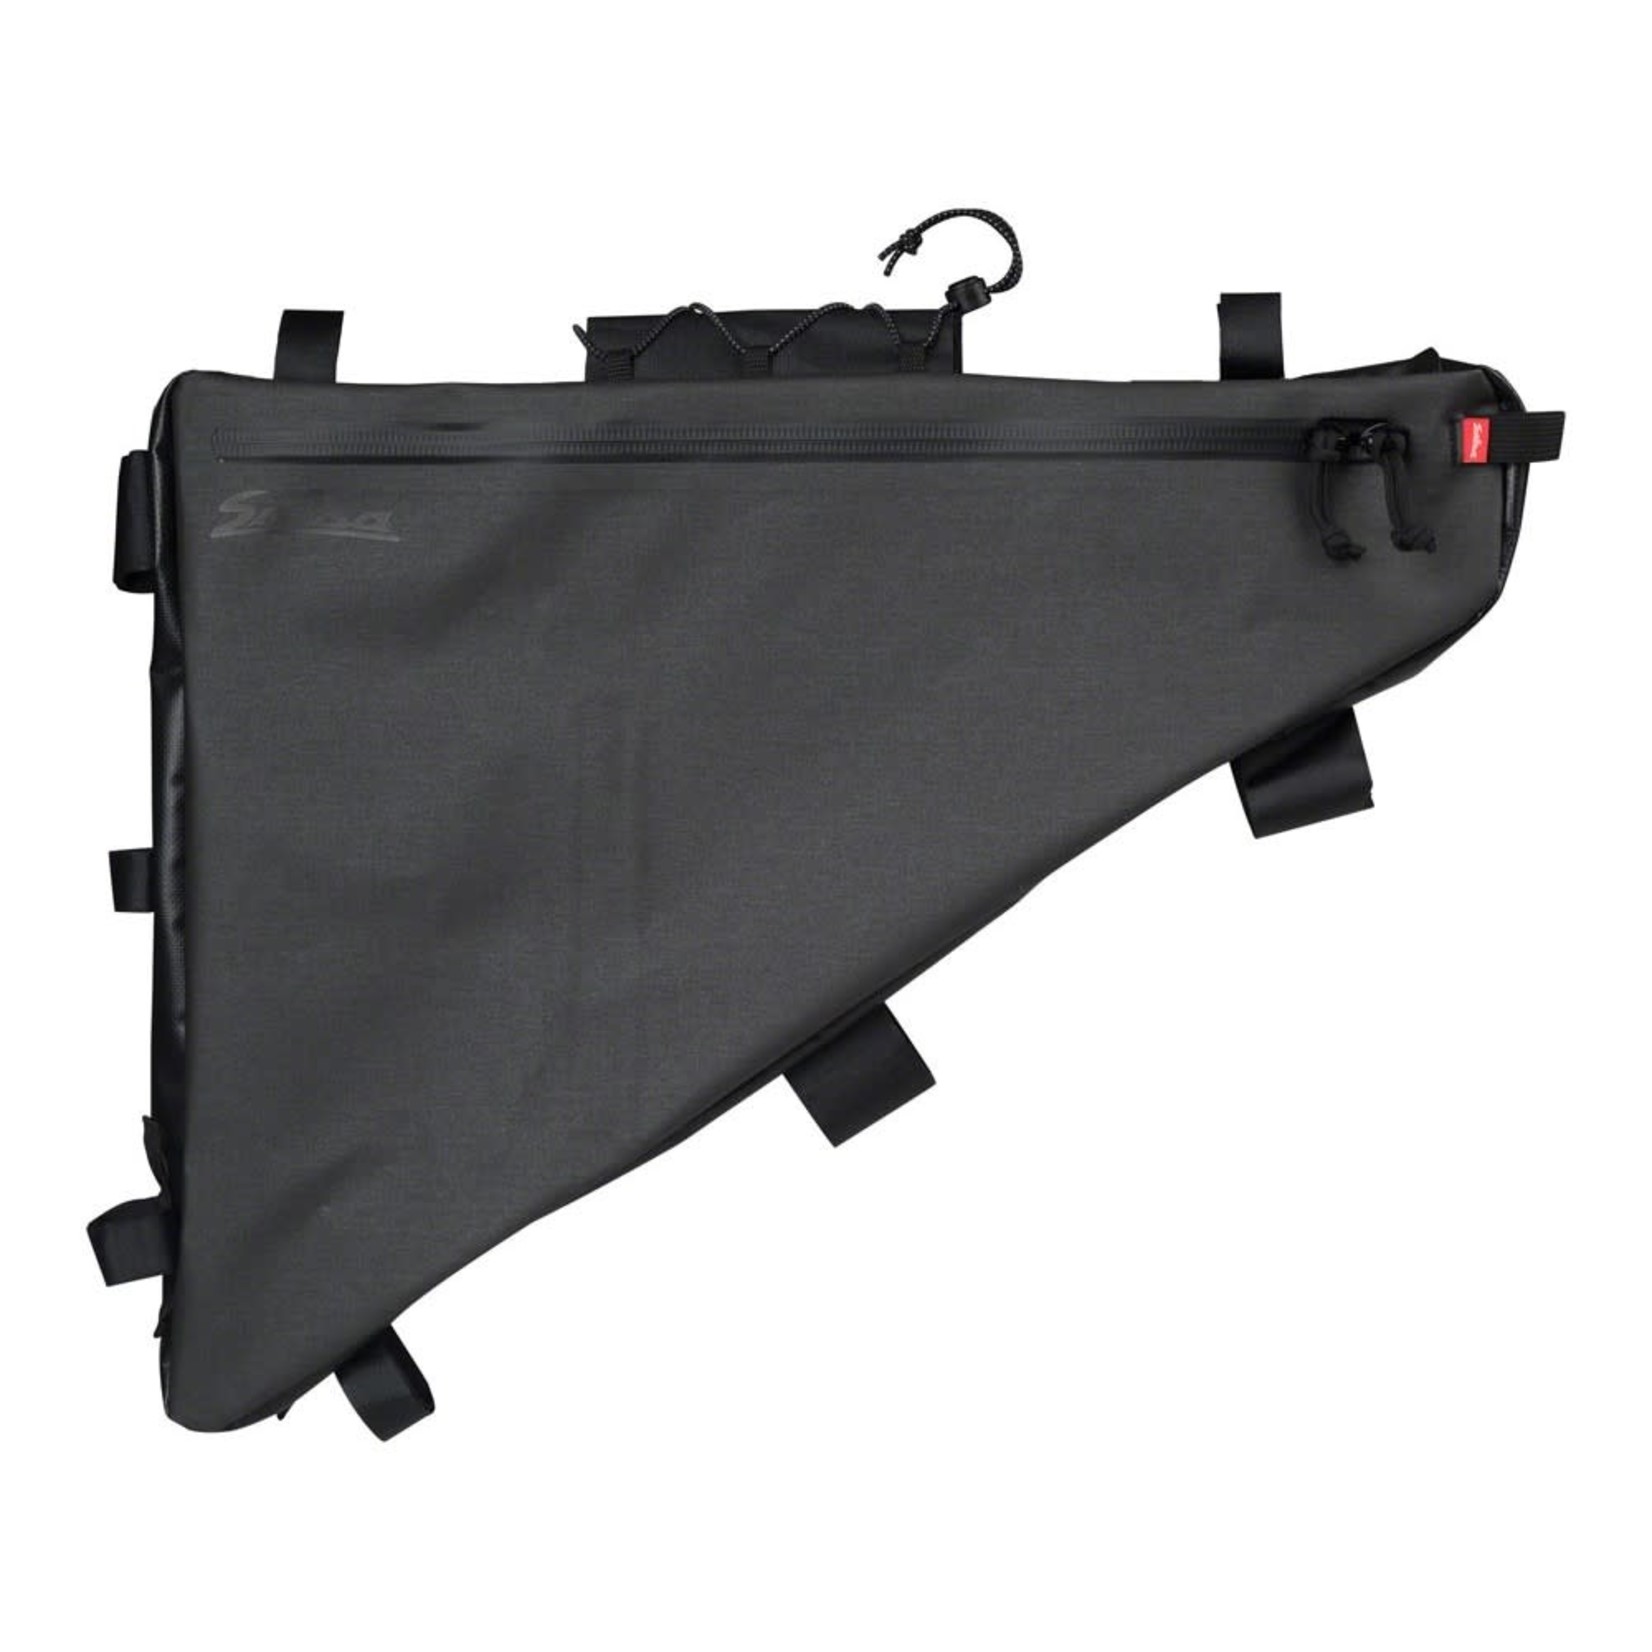 Salsa EXP Series Hardtail Frame Bag Black - 8 - Fargo XL